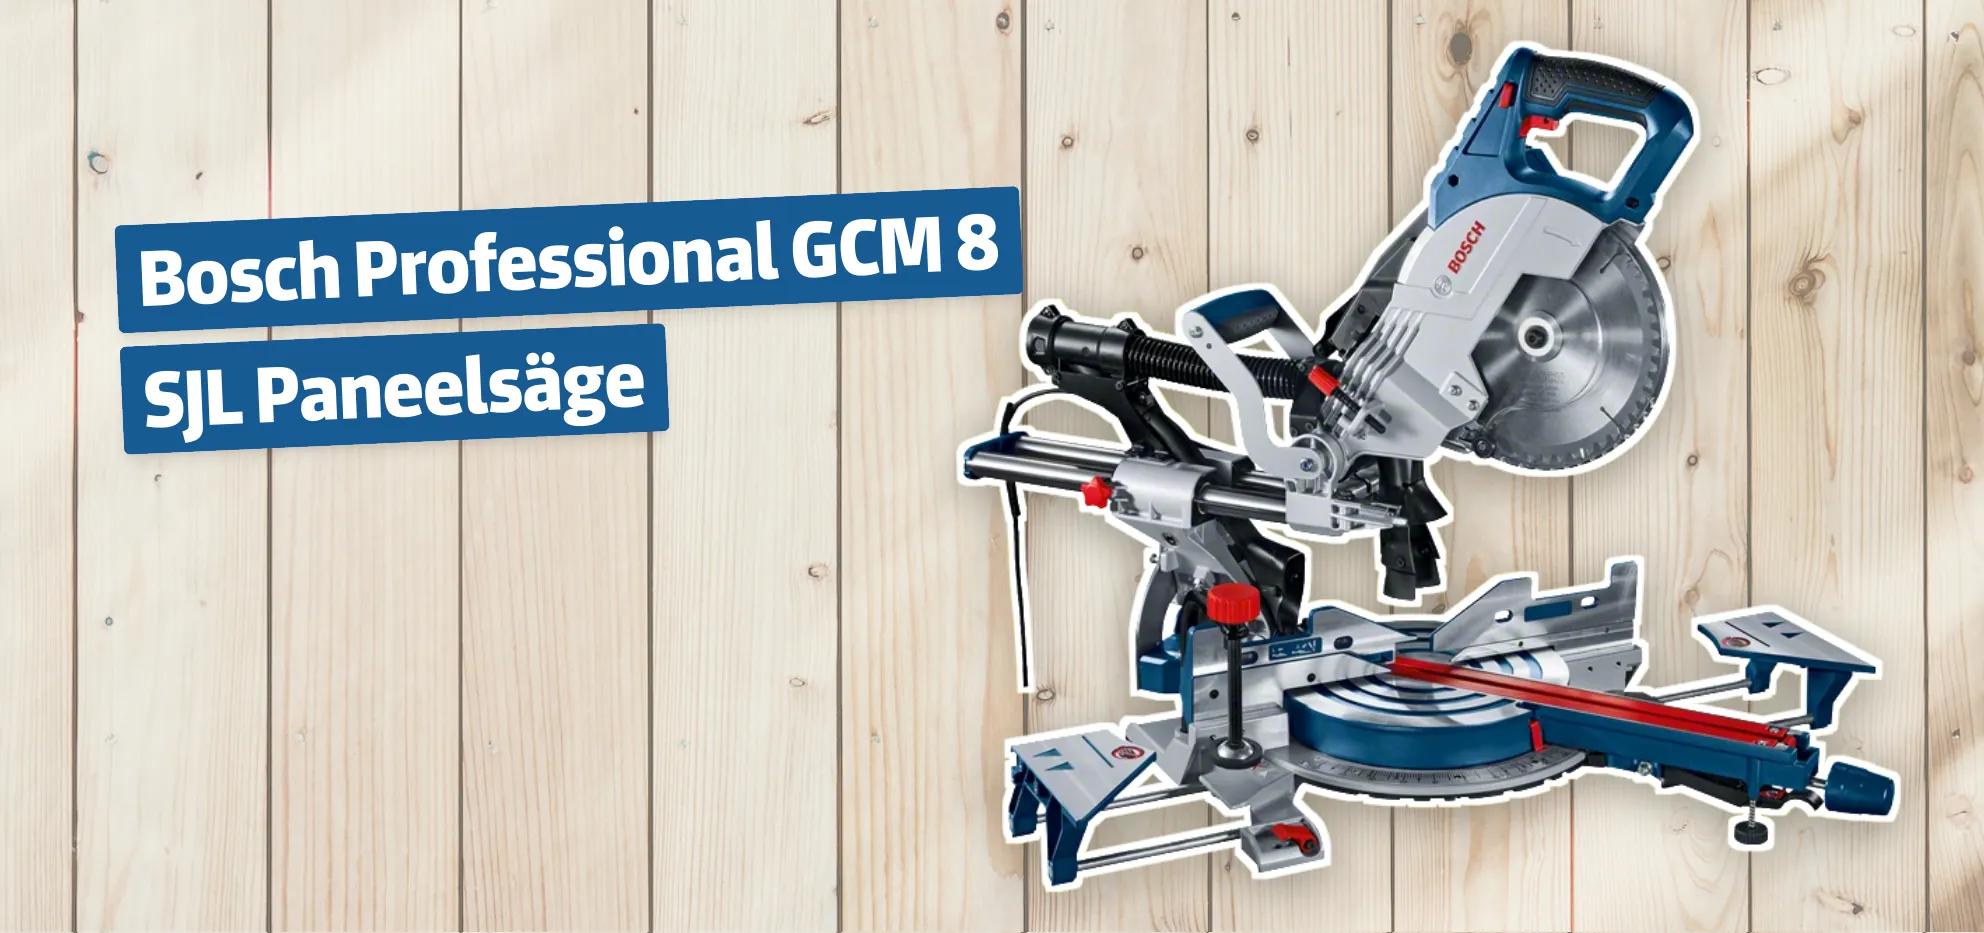 Bosch Professional GCM 8 SJL Paneelsäge